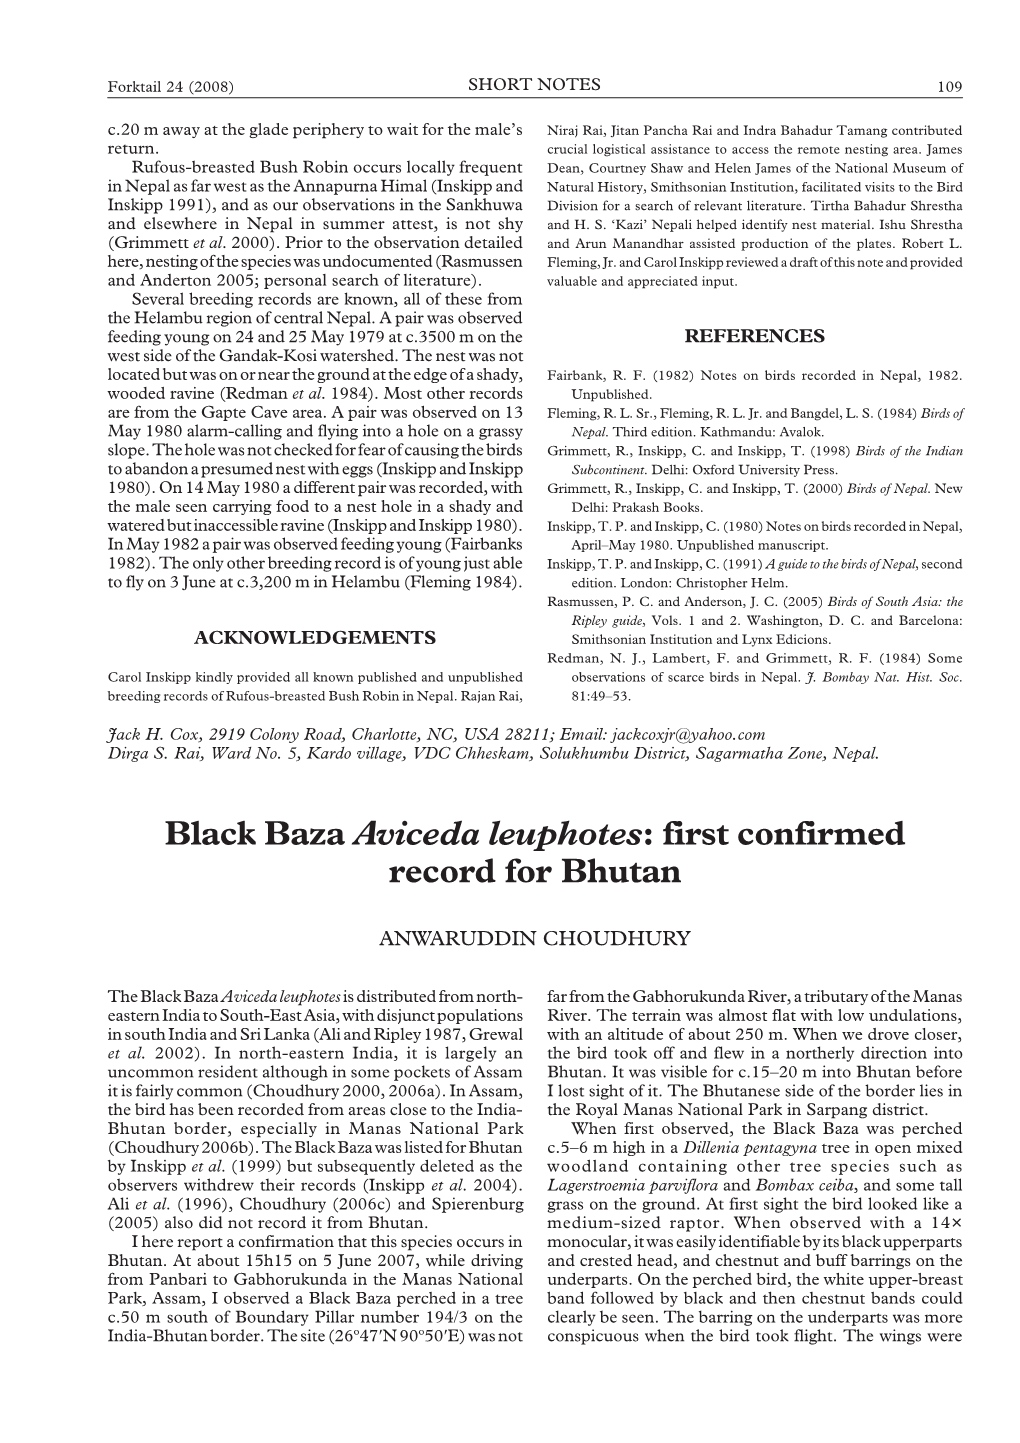 Black Baza Aviceda Leuphotes: First Confirmed Record for Bhutan